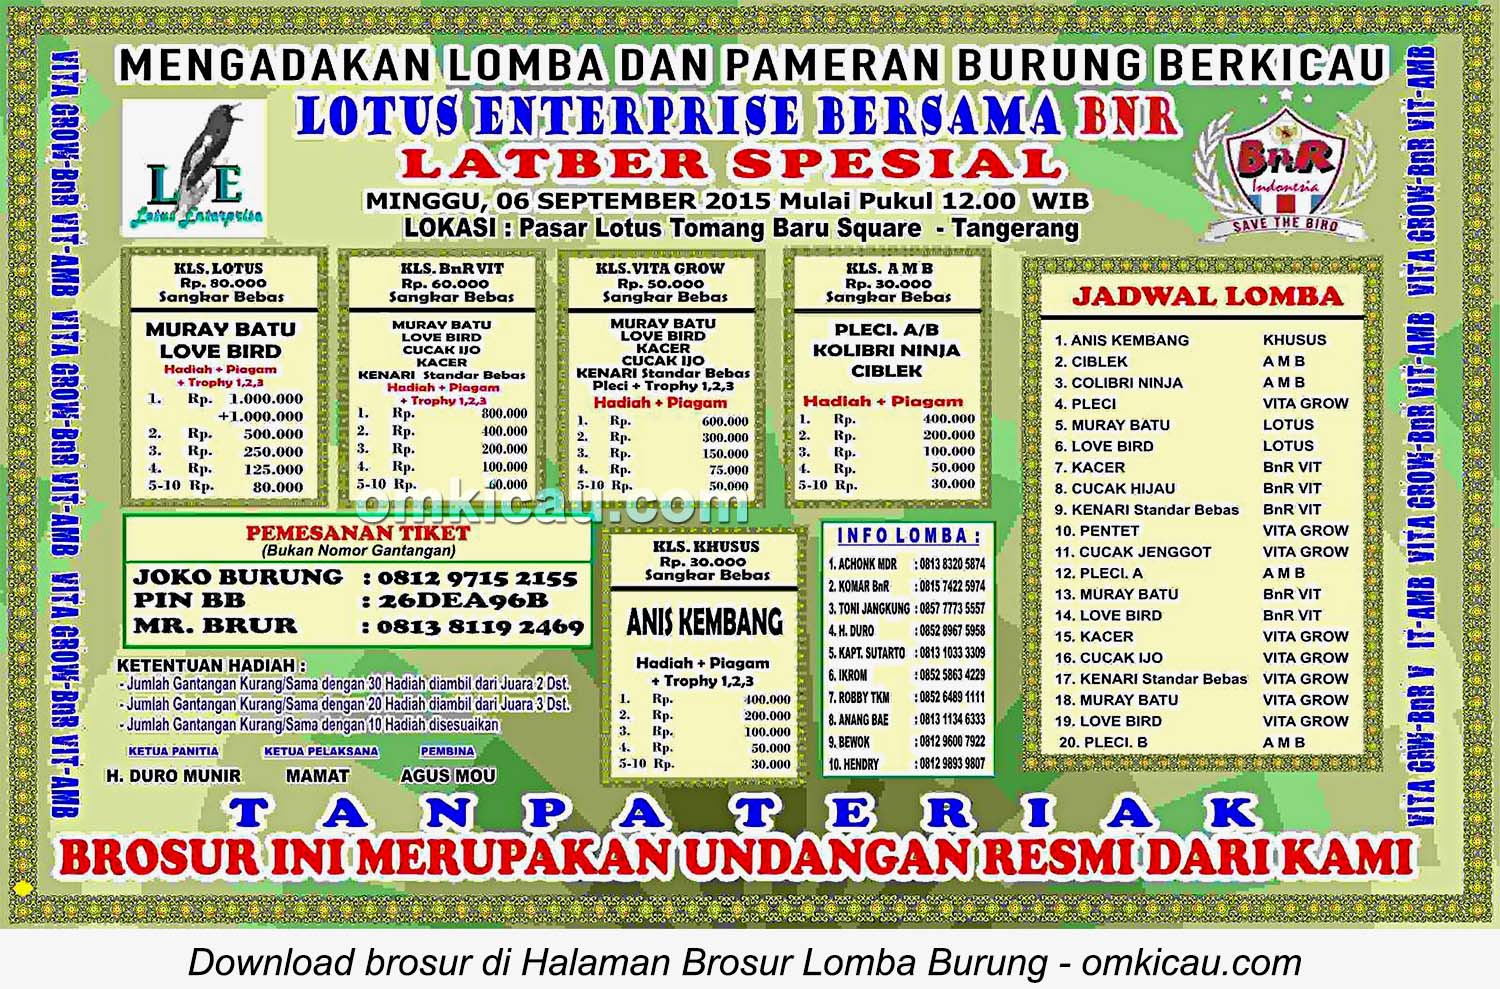 Brosur Latber Spesial Lotus Enterprise Bersama BnR, Tangerang, 6 September 2015